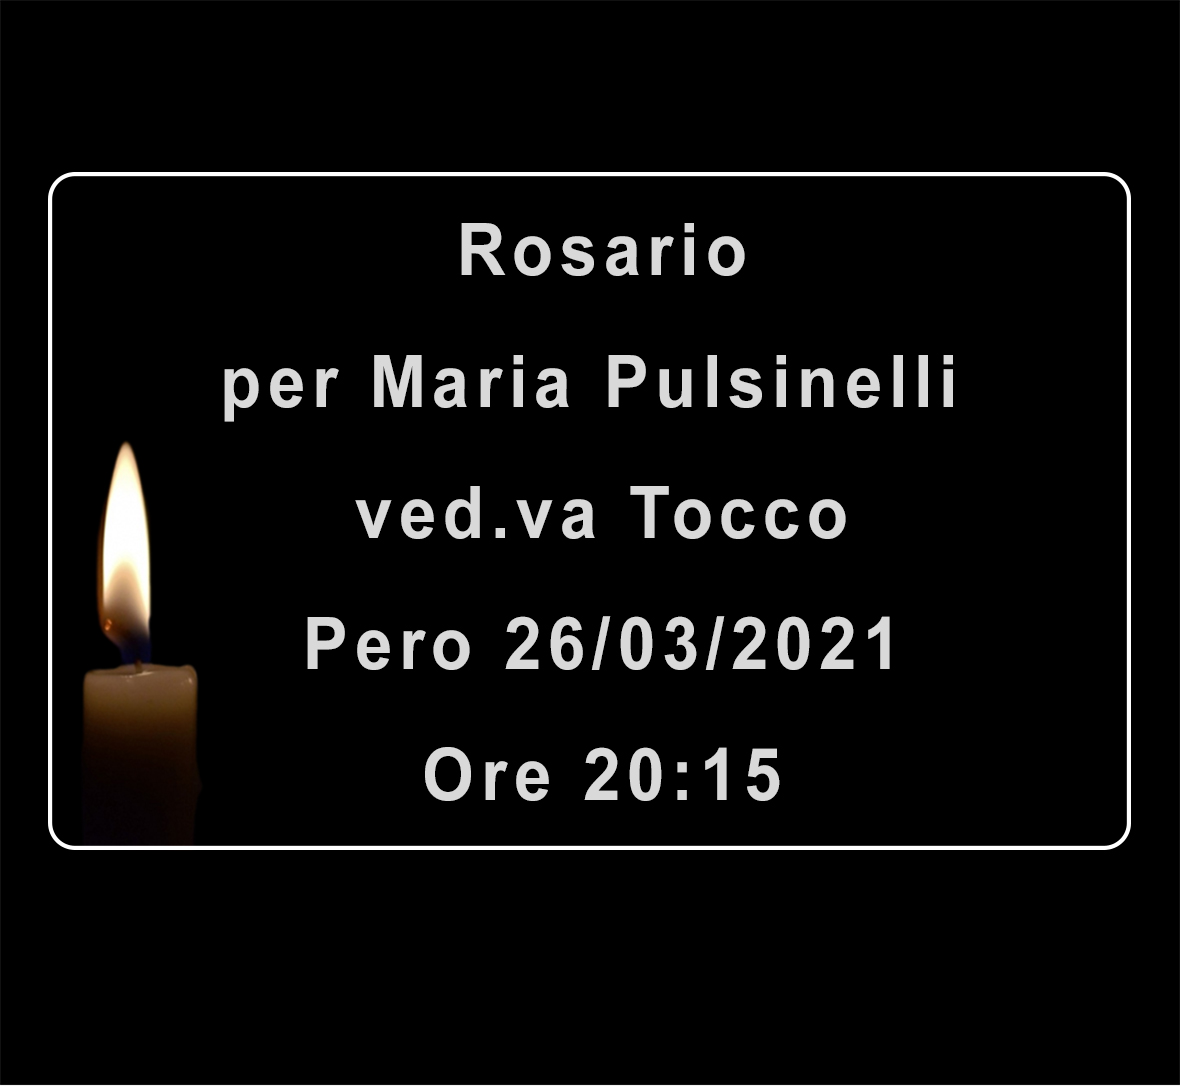 Rosario per Maria Pulsinelli ved.va Tocco